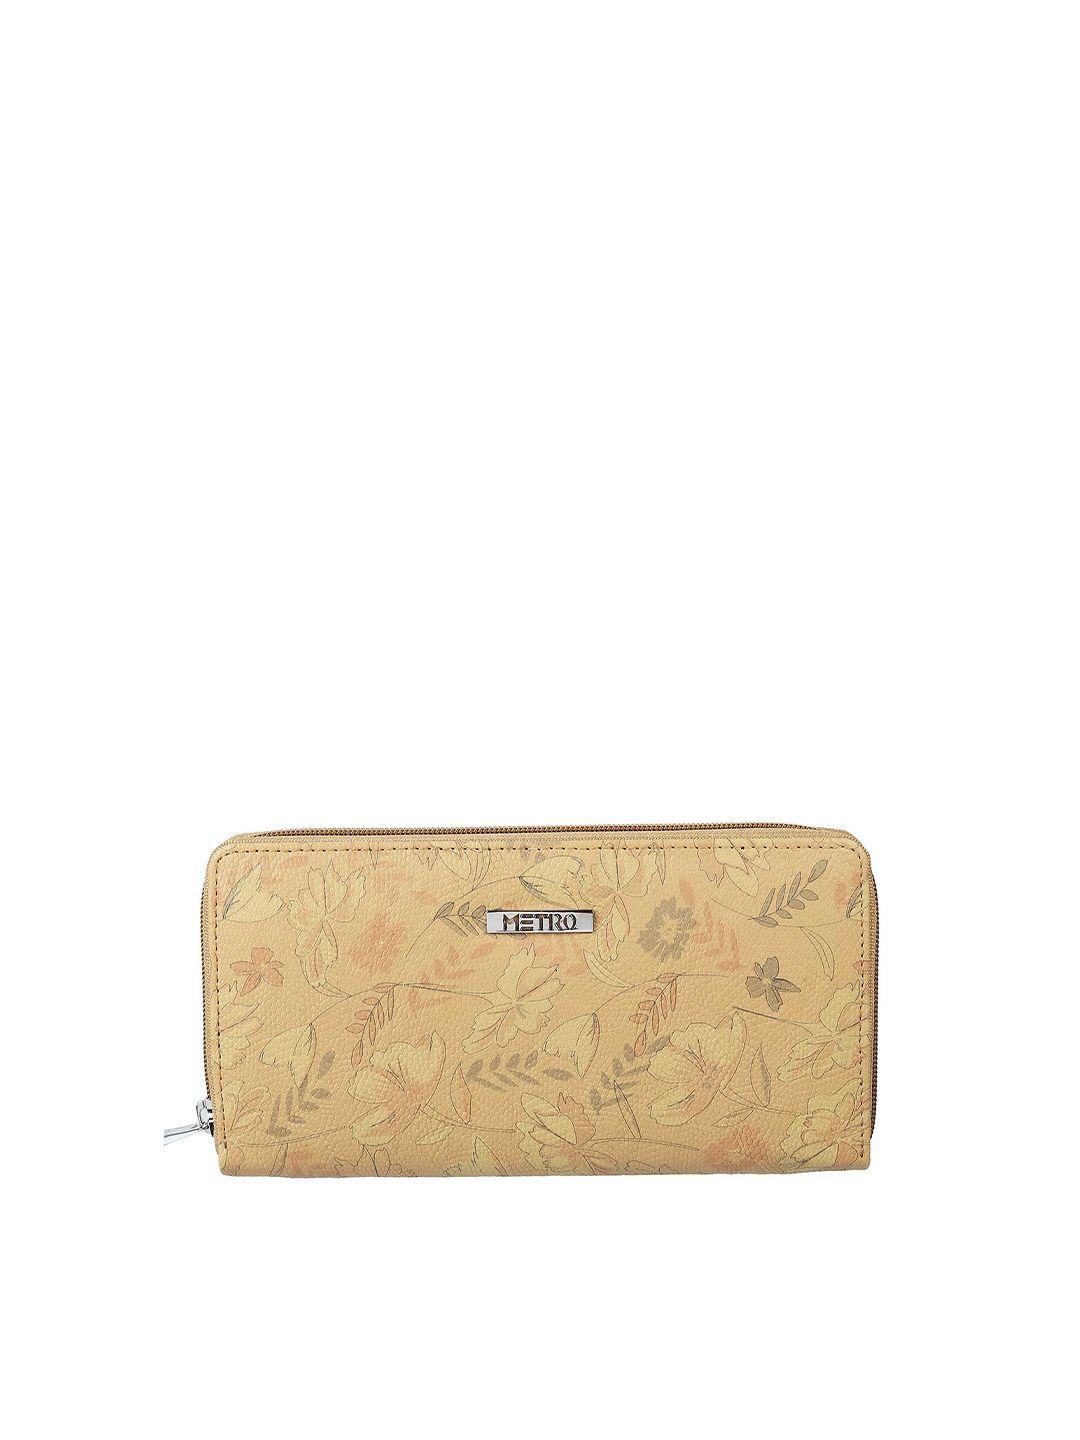 metro-women-beige-floral-printed-zip-around-wallet